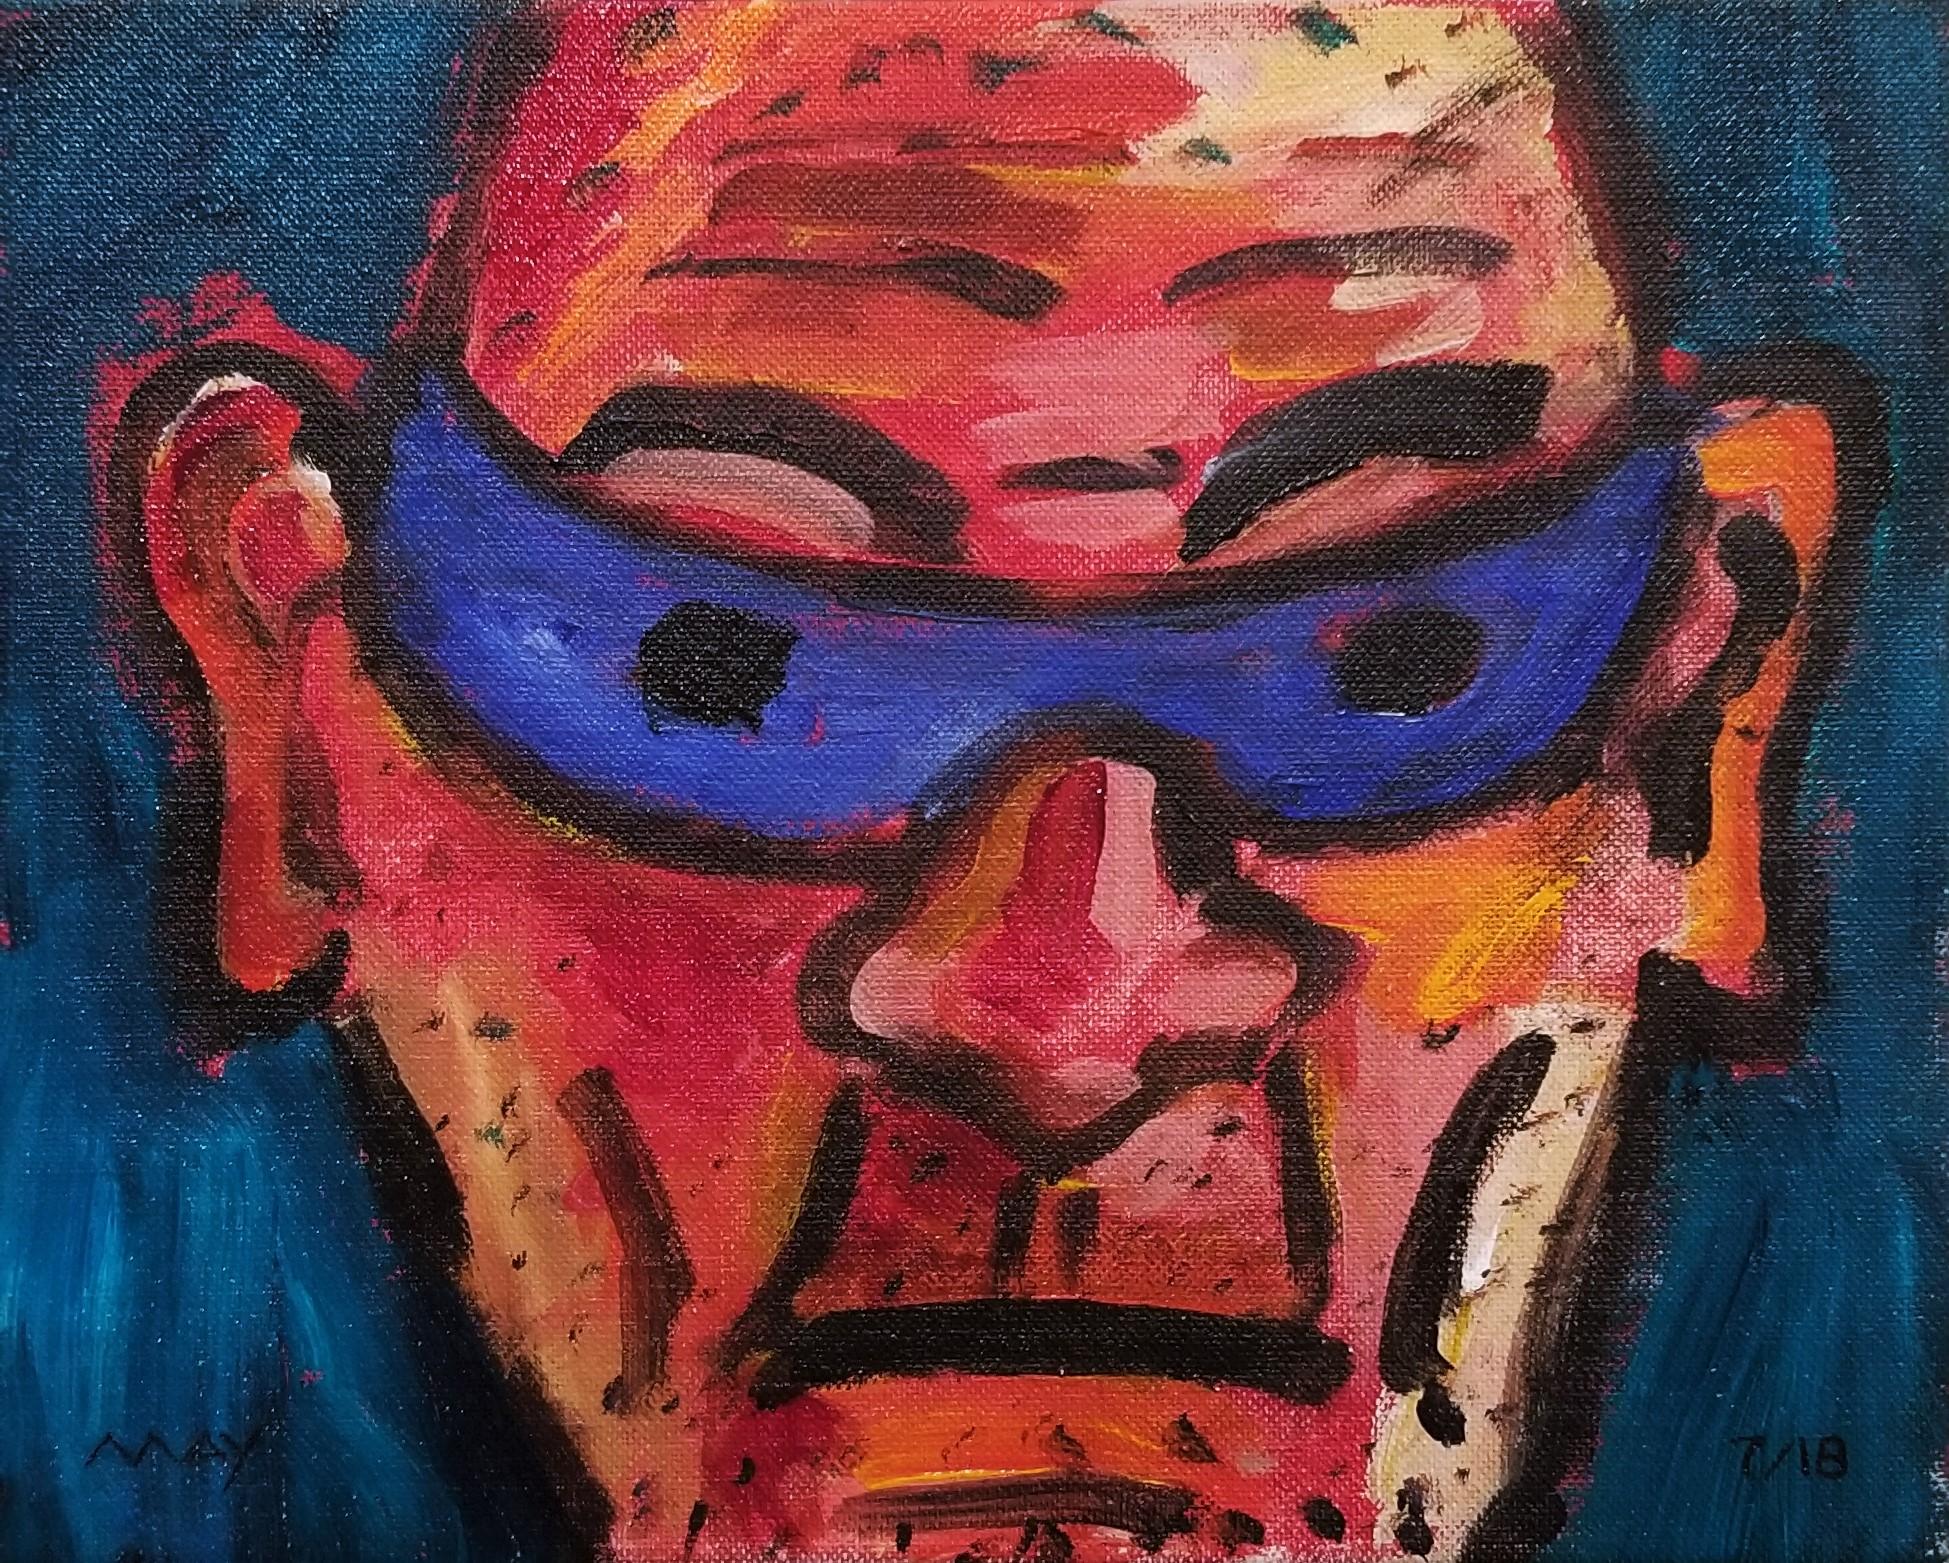 Dan May Portrait Painting – Criminal #23 /// Zeitgenössische Pop Art Malerei Gefängnis Gefangener Lustiger Bandit Figur